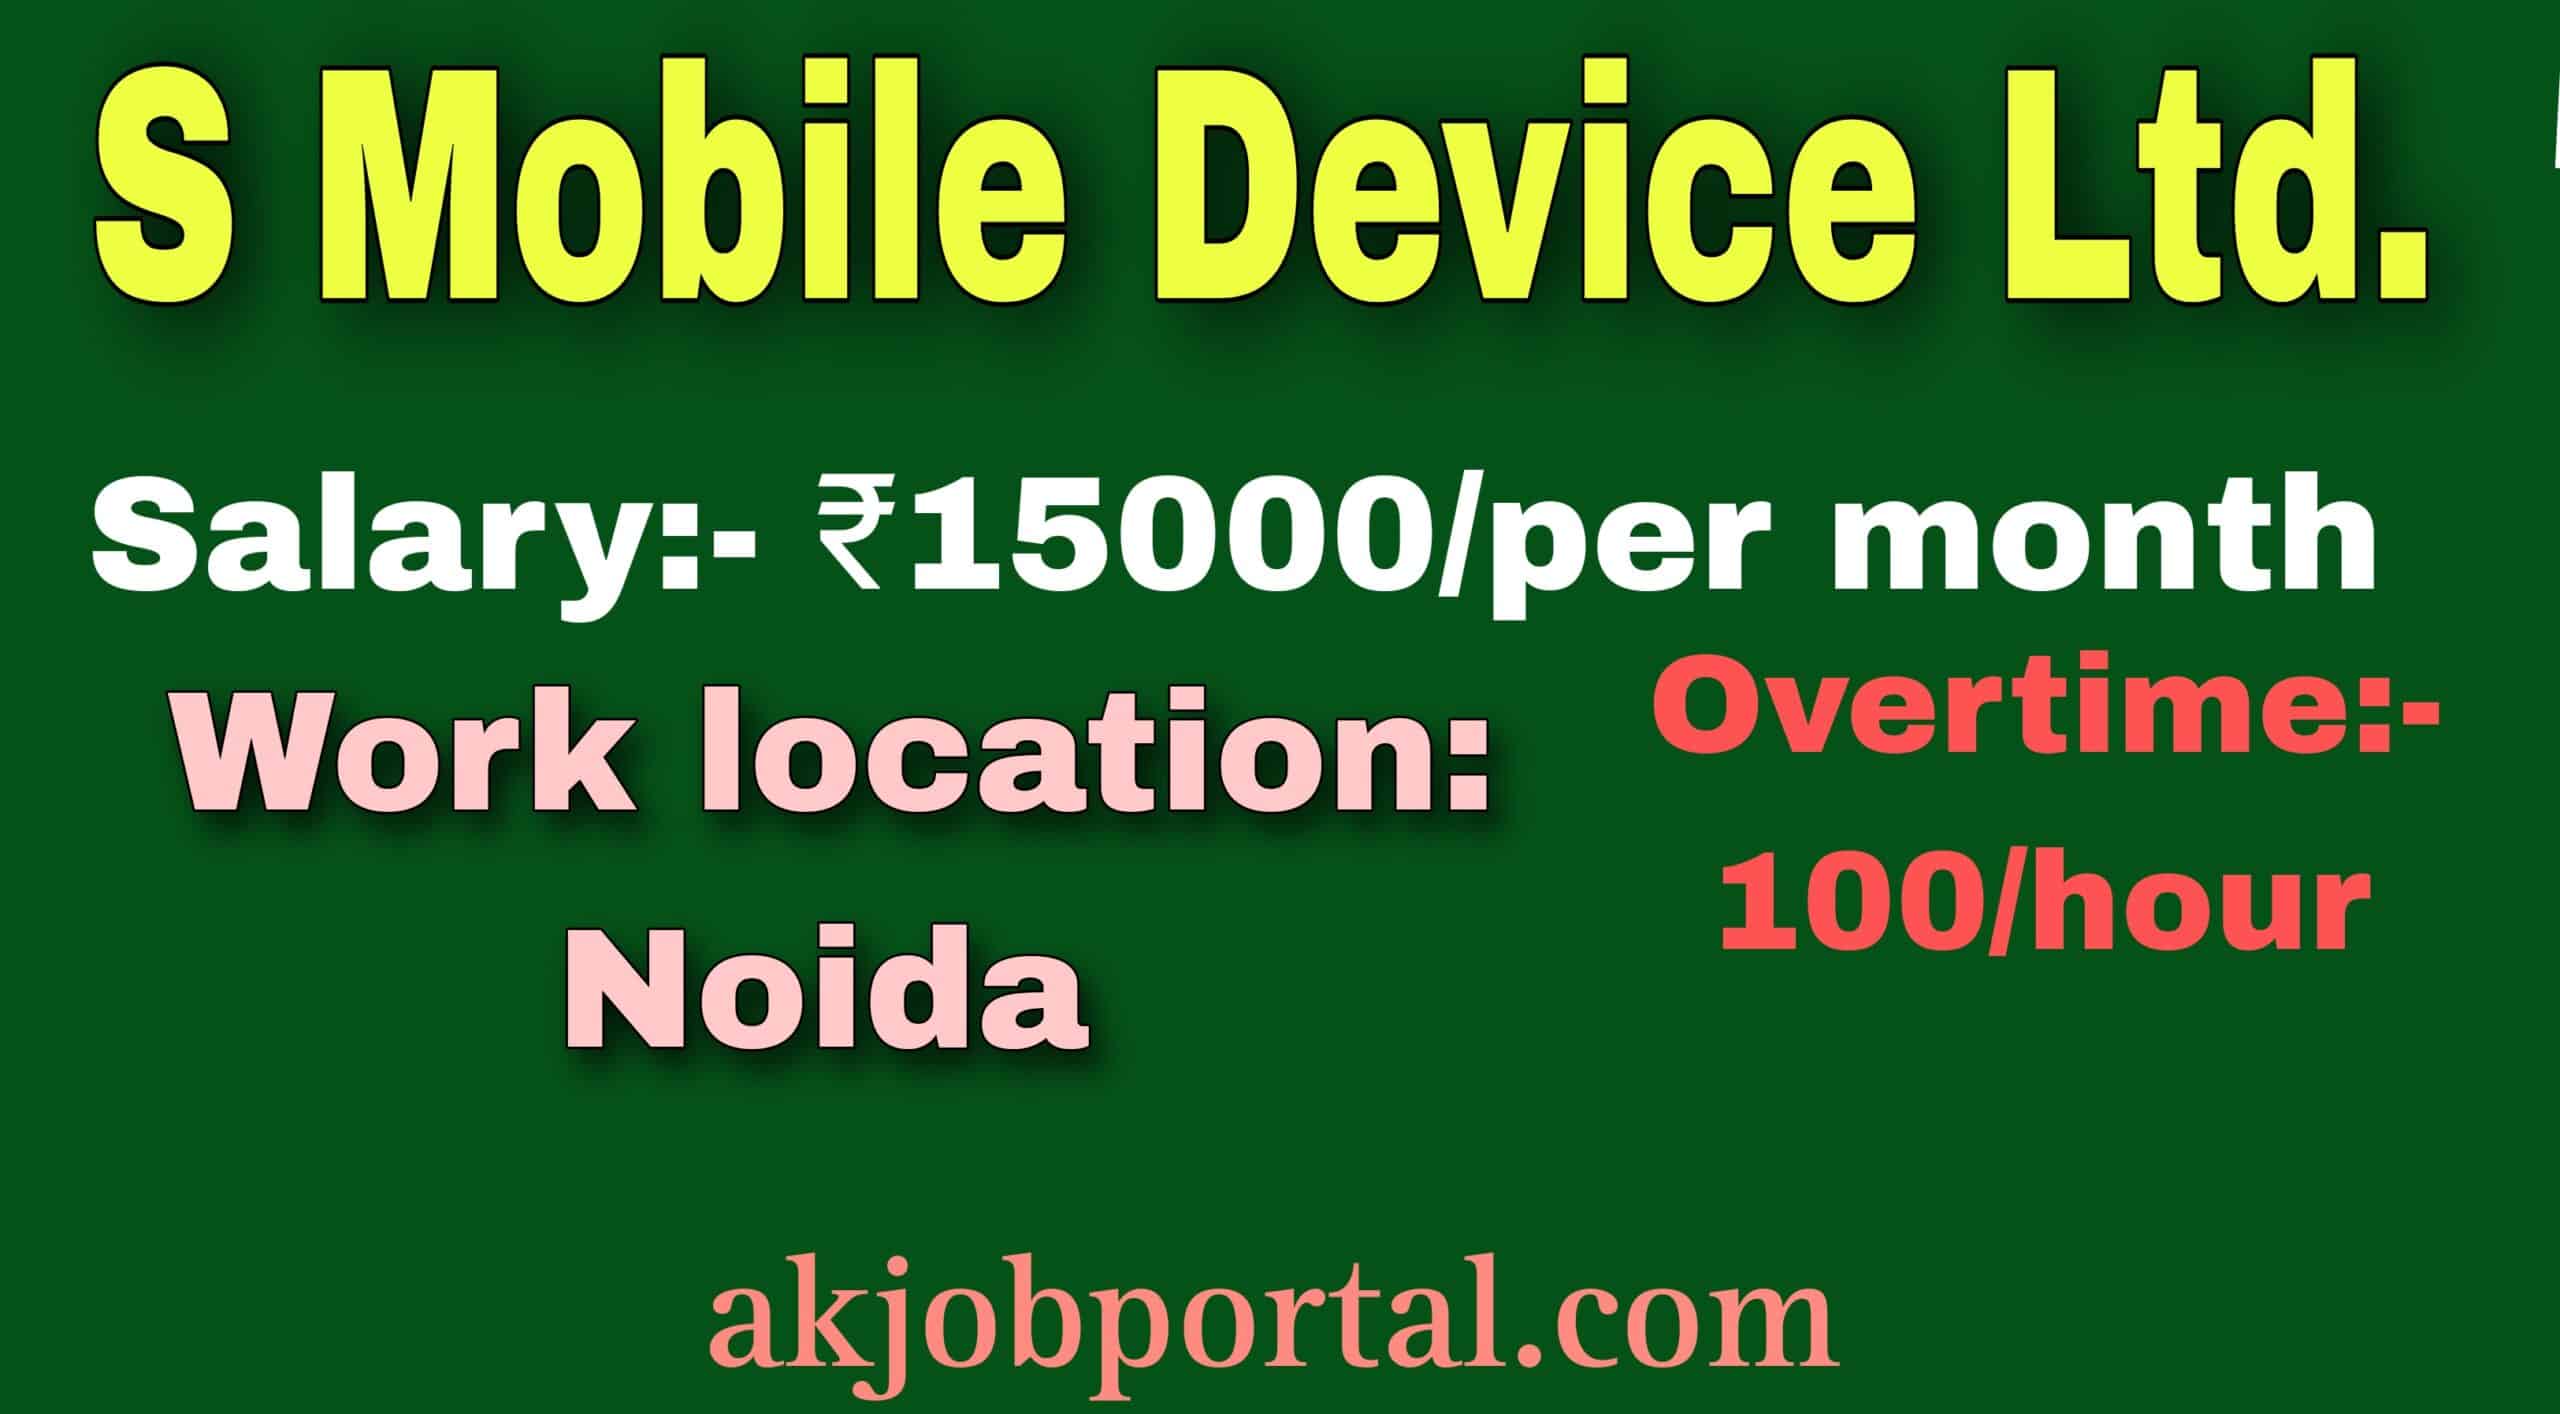 S Mobile Devices Ltd Company Jobs